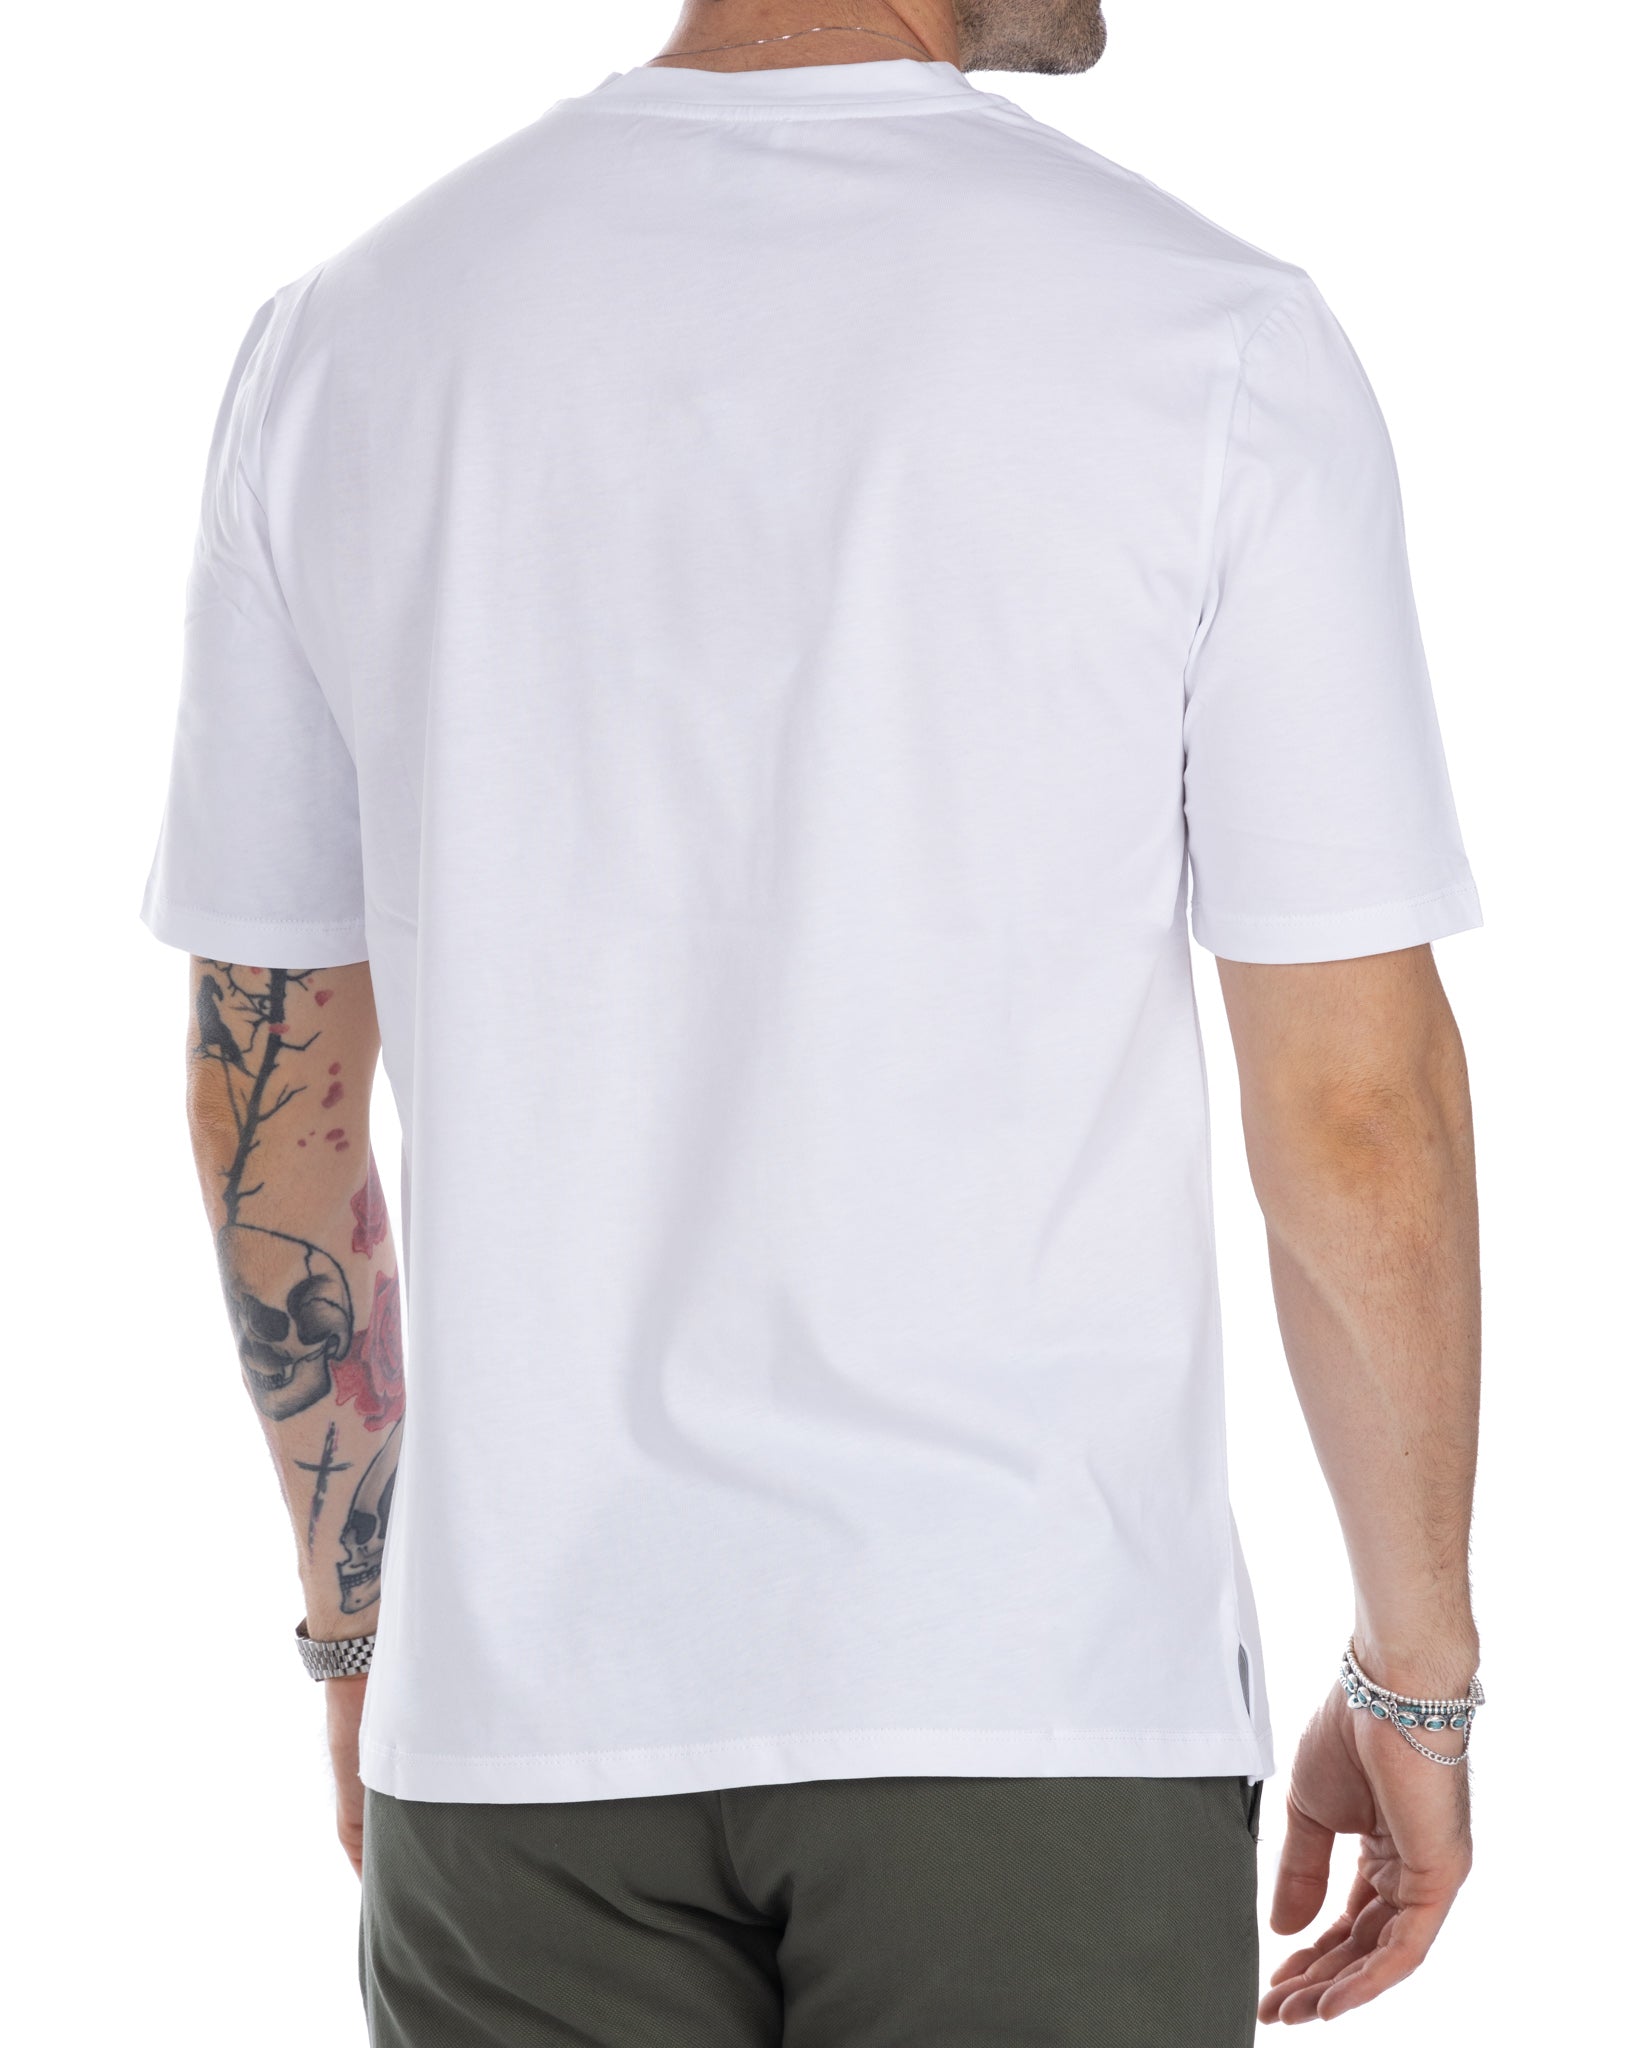 Tee - t-shirt bianca basic in cotone